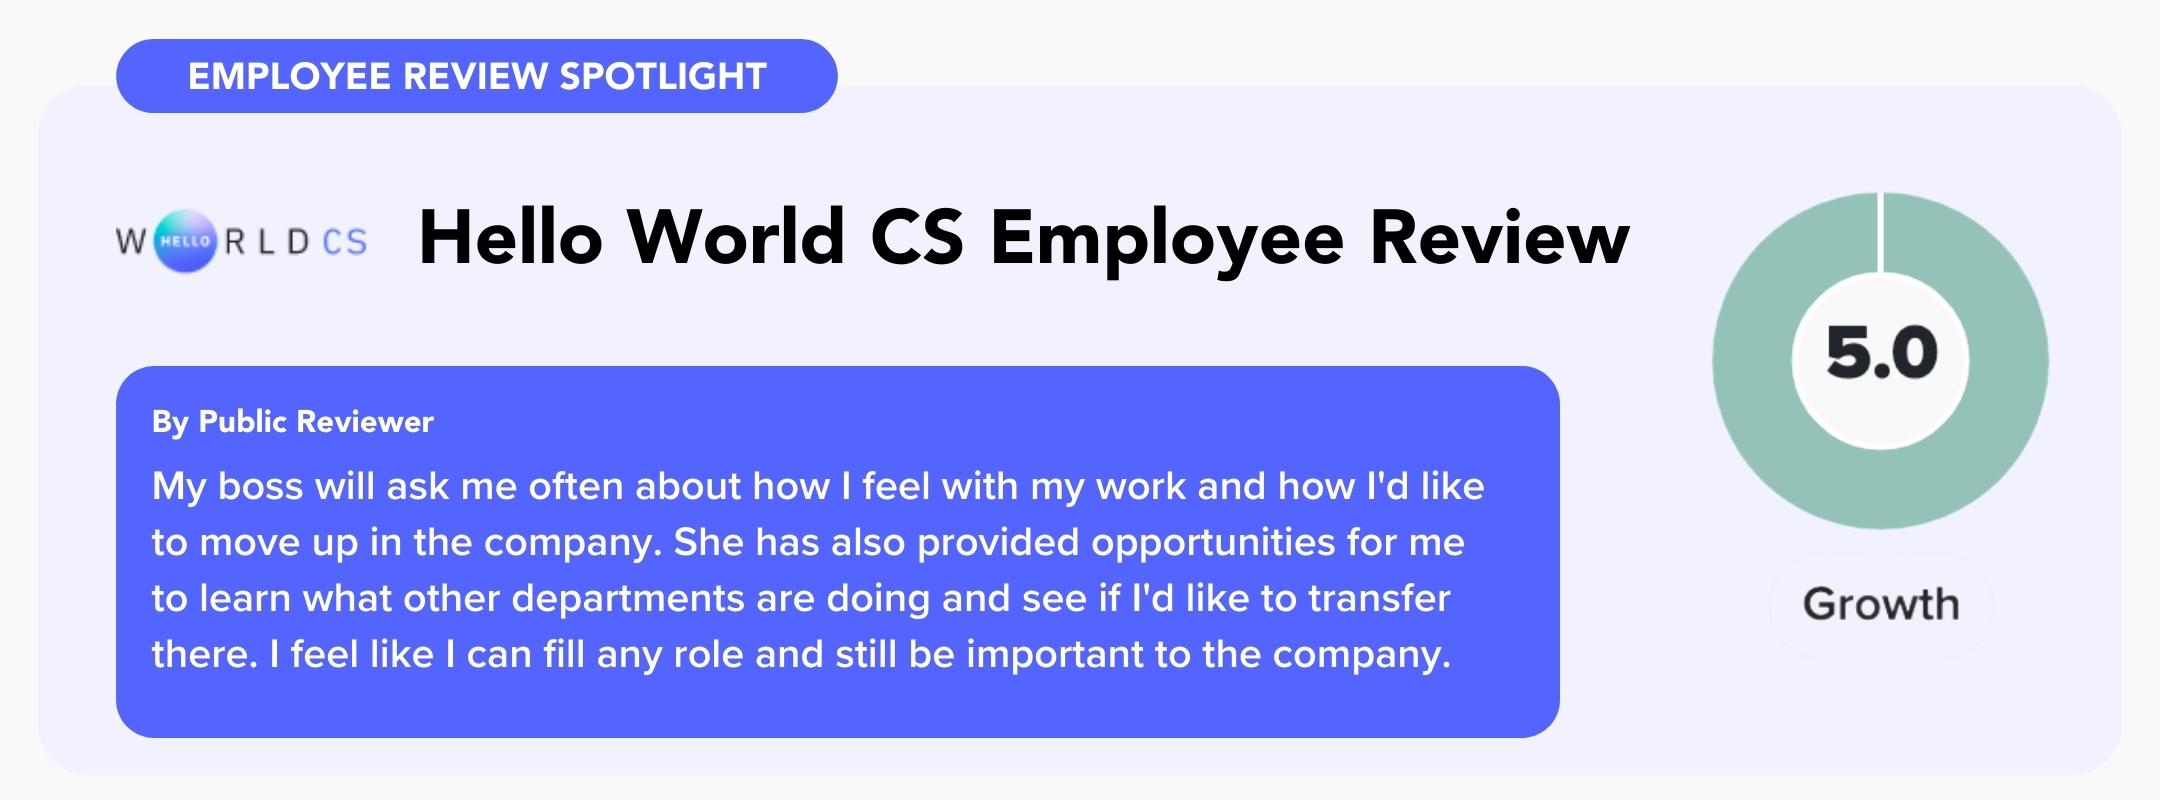 Hello World CS employee review